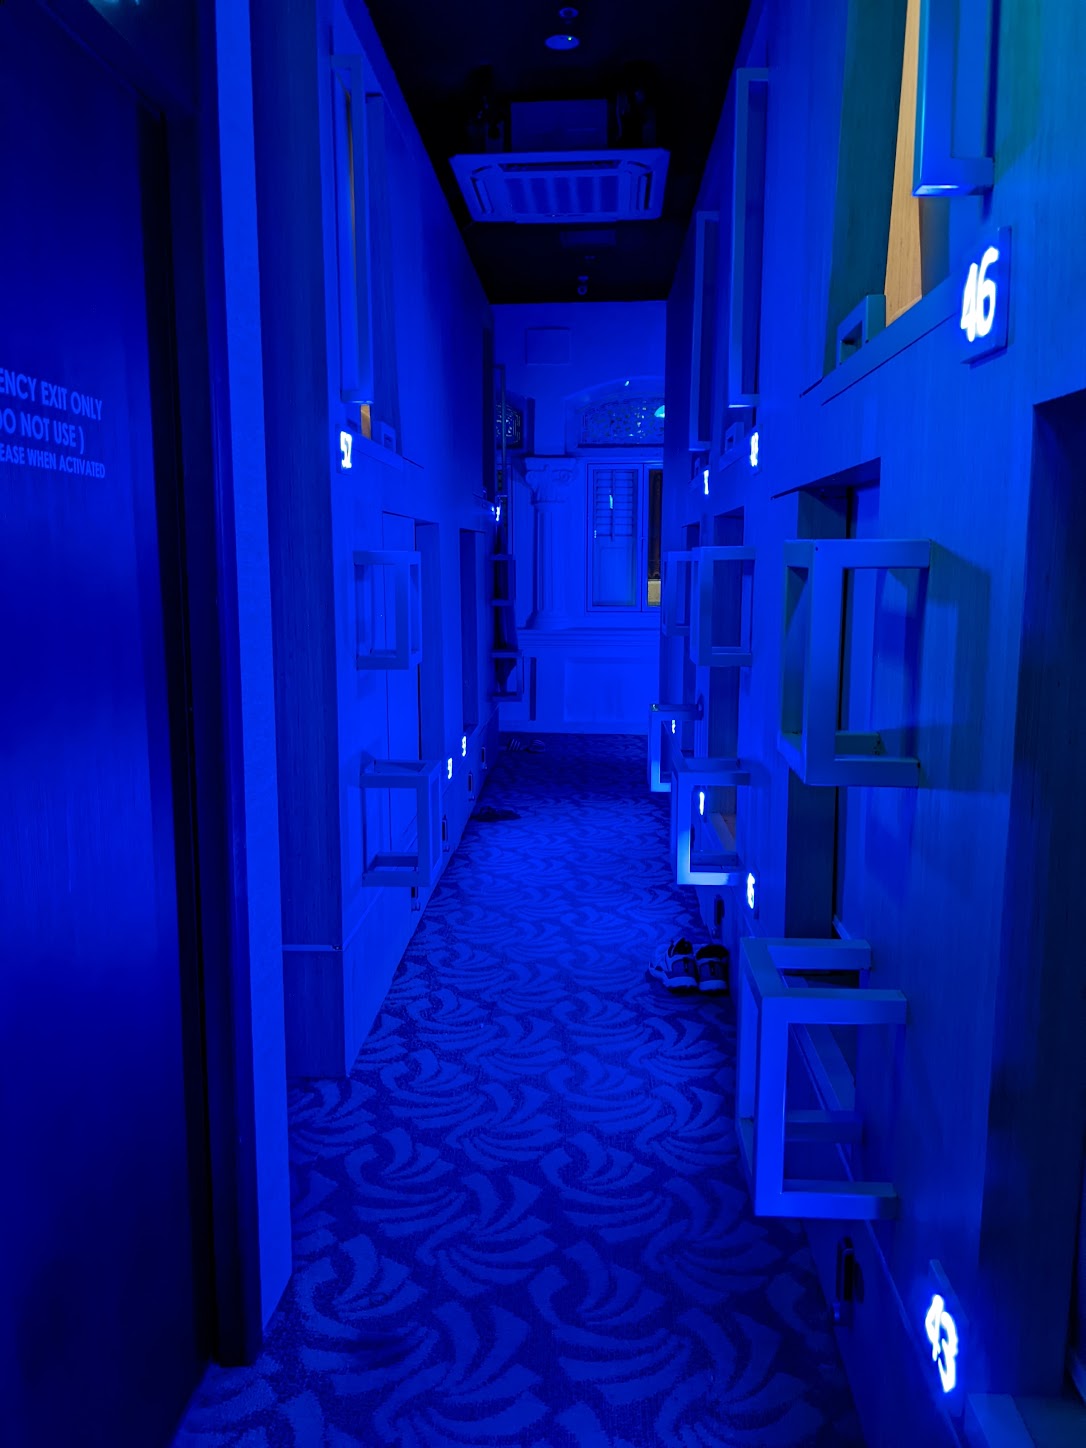 a hallway with blue lights